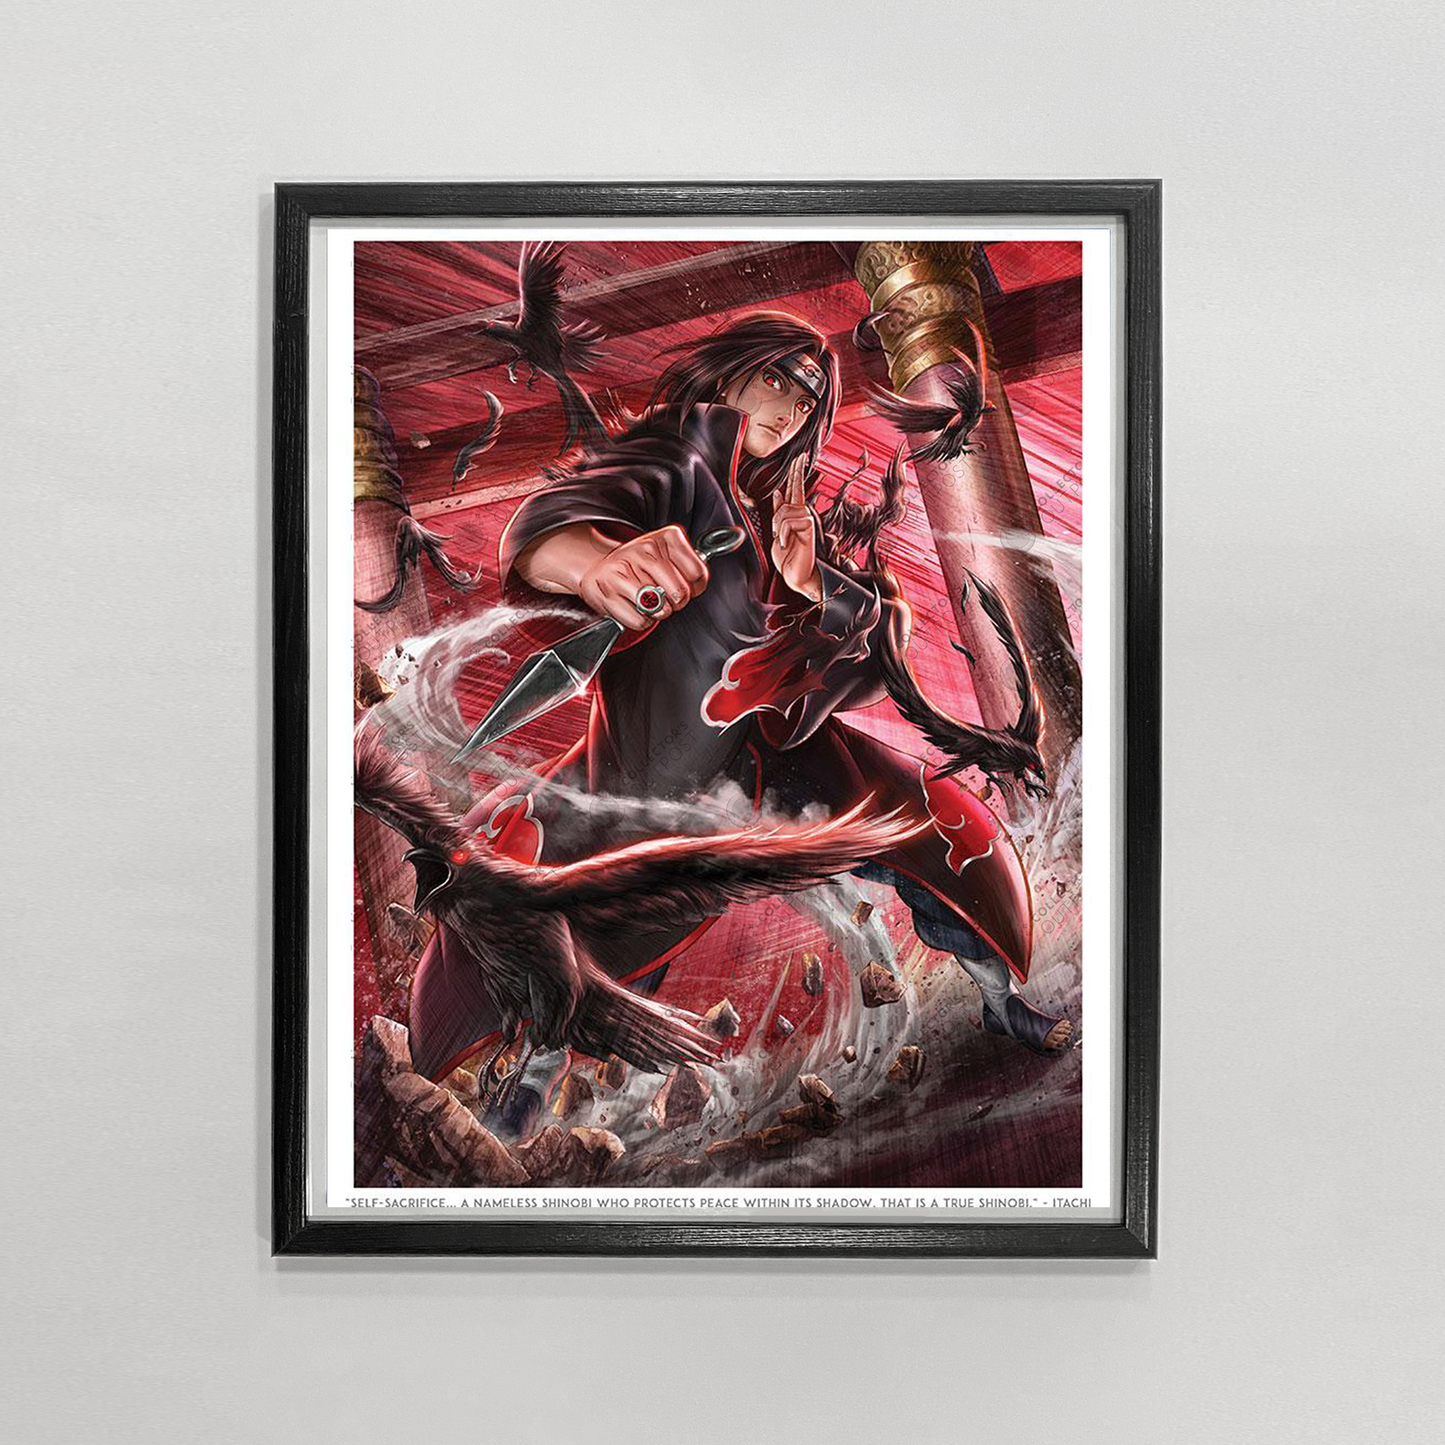 Itachi "The Clan Killer" (Naruto Shippuden) Premium Art Print